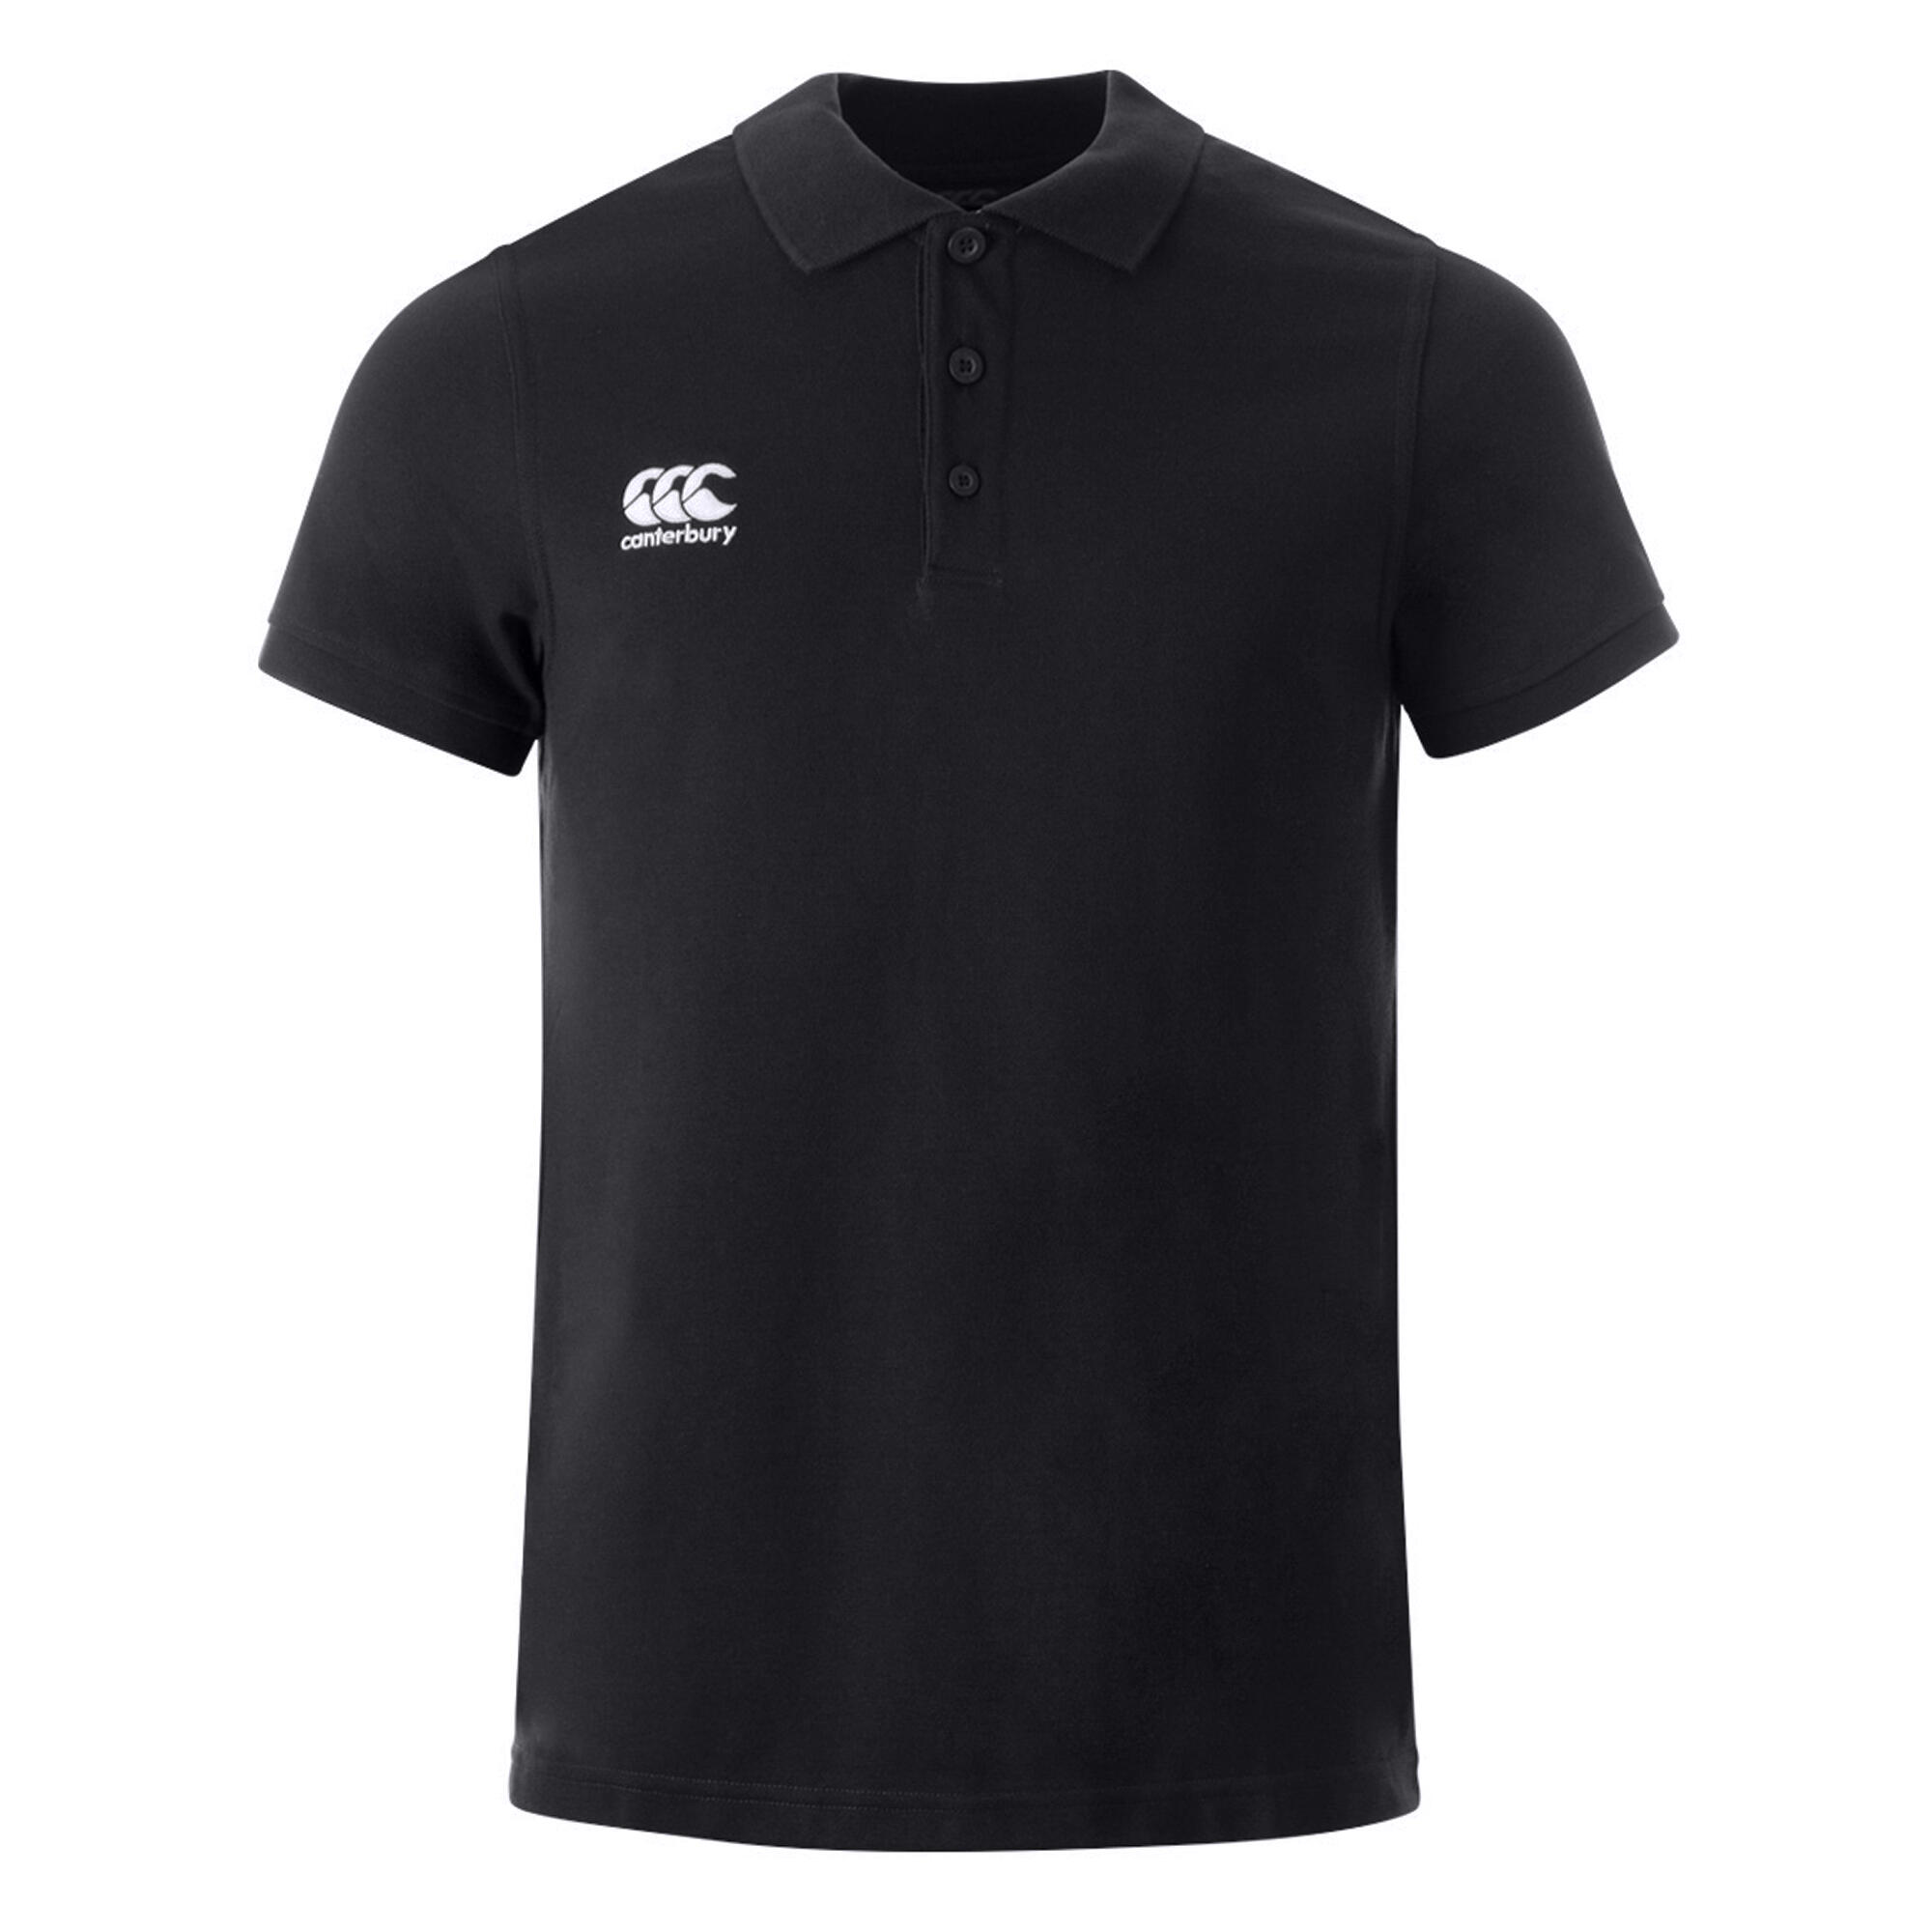 CANTERBURY Unisex Adult Polo Shirt (Black)